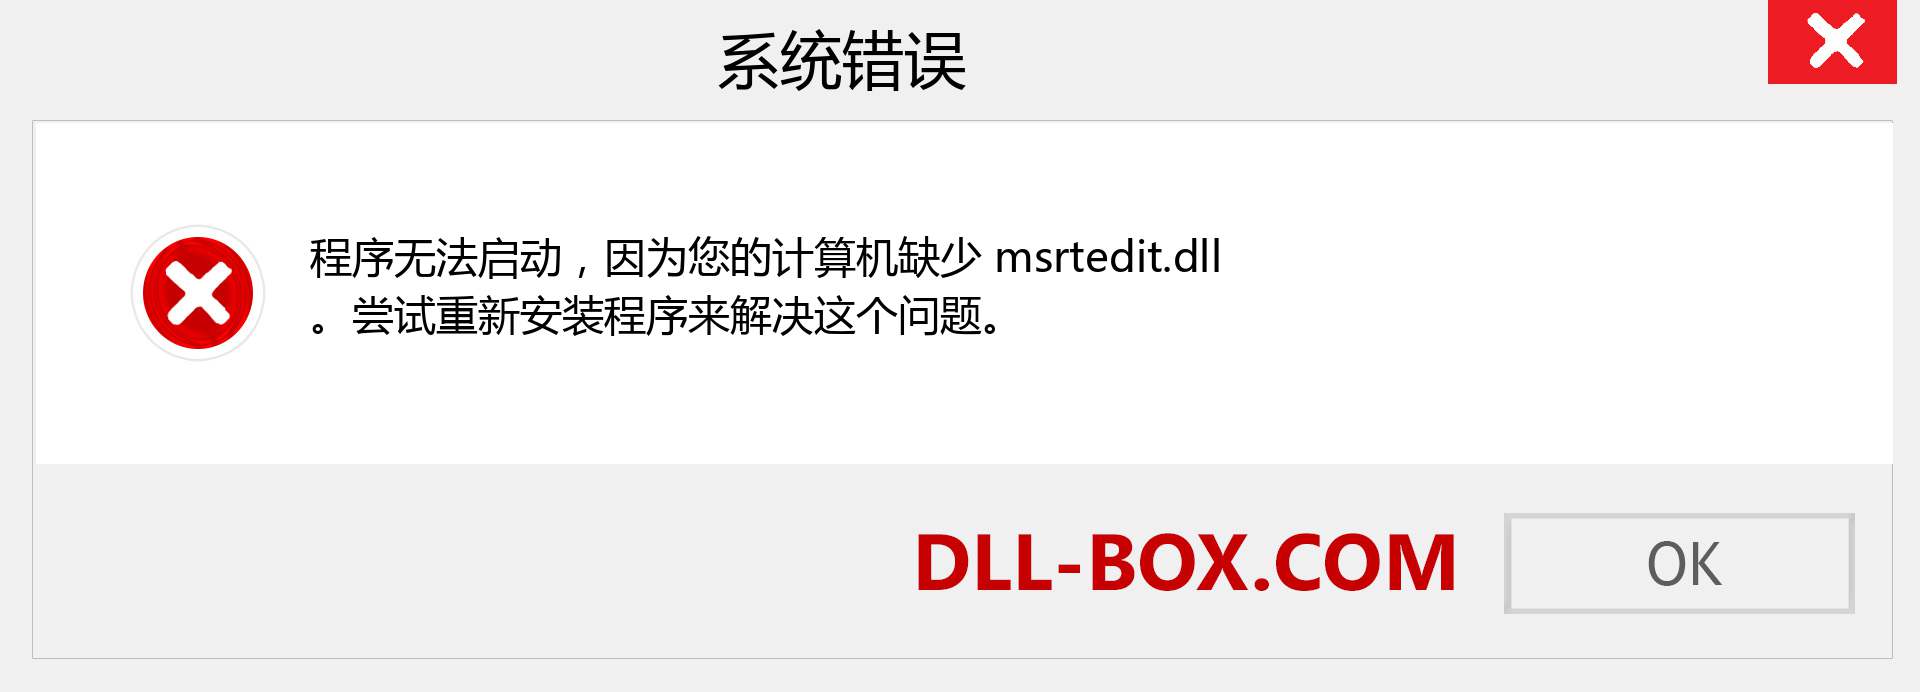 msrtedit.dll 文件丢失？。 适用于 Windows 7、8、10 的下载 - 修复 Windows、照片、图像上的 msrtedit dll 丢失错误